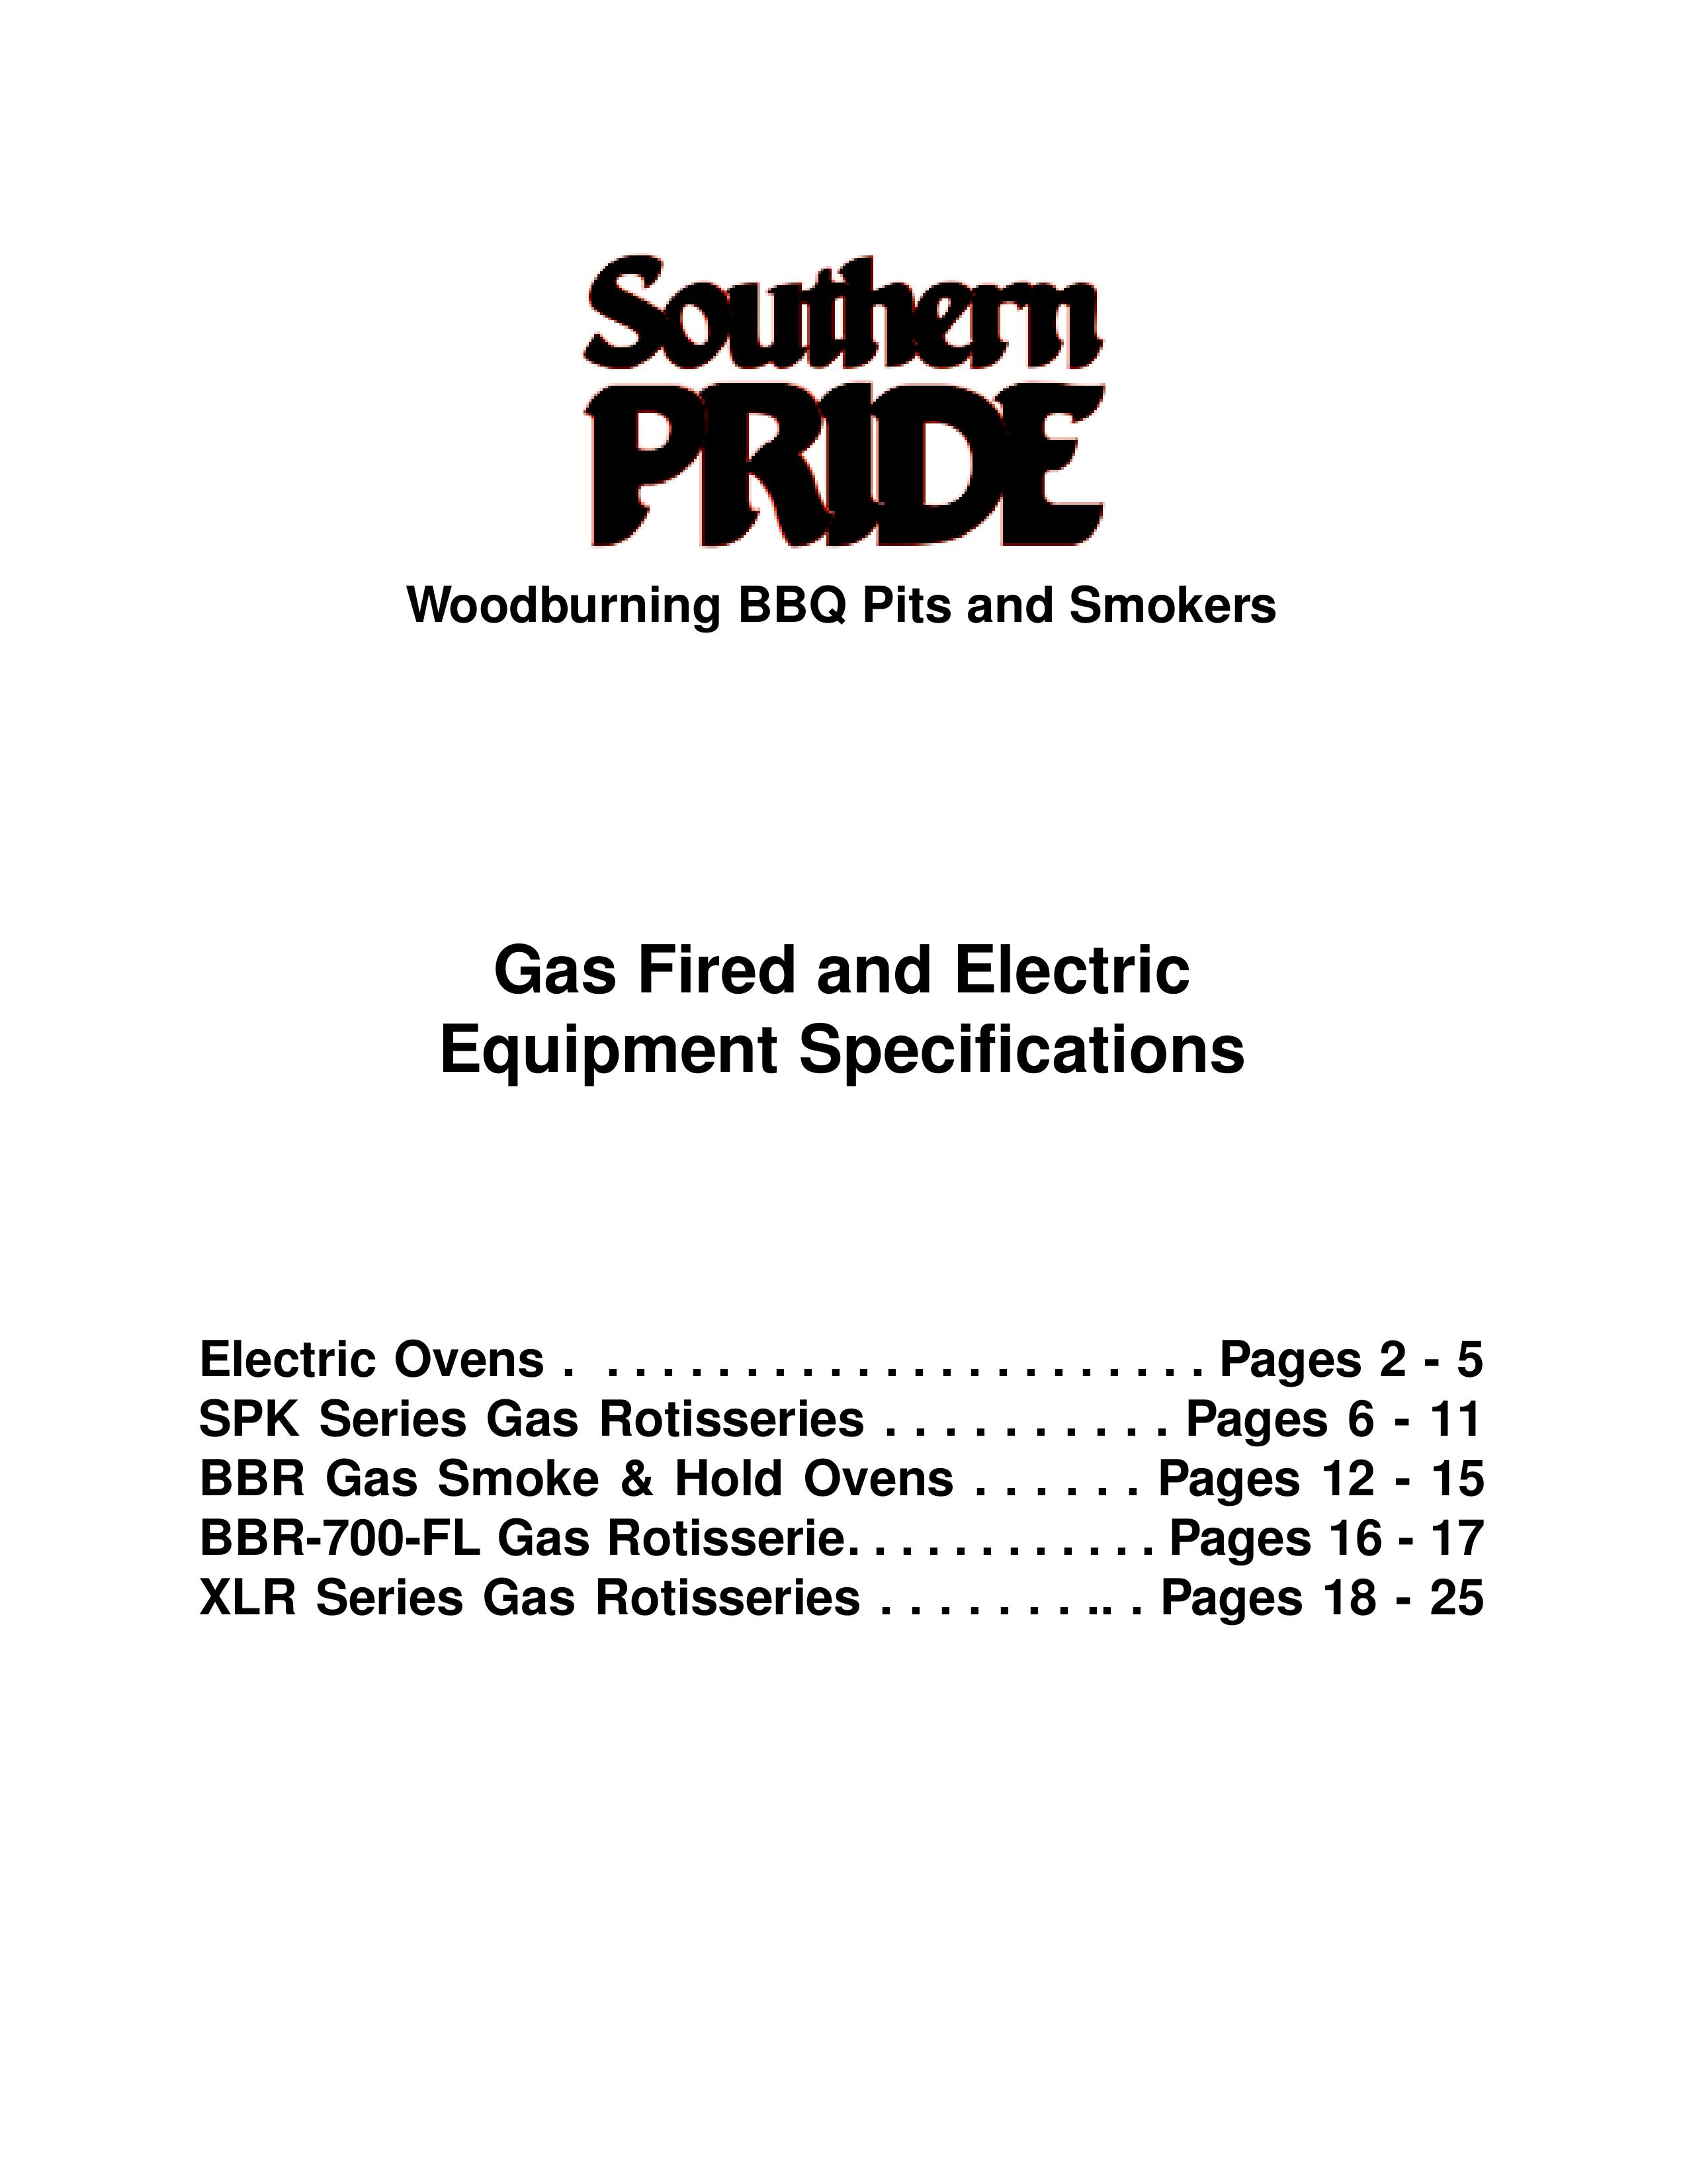 Southern Pride BBR-79-3-SSE Smoker User Manual